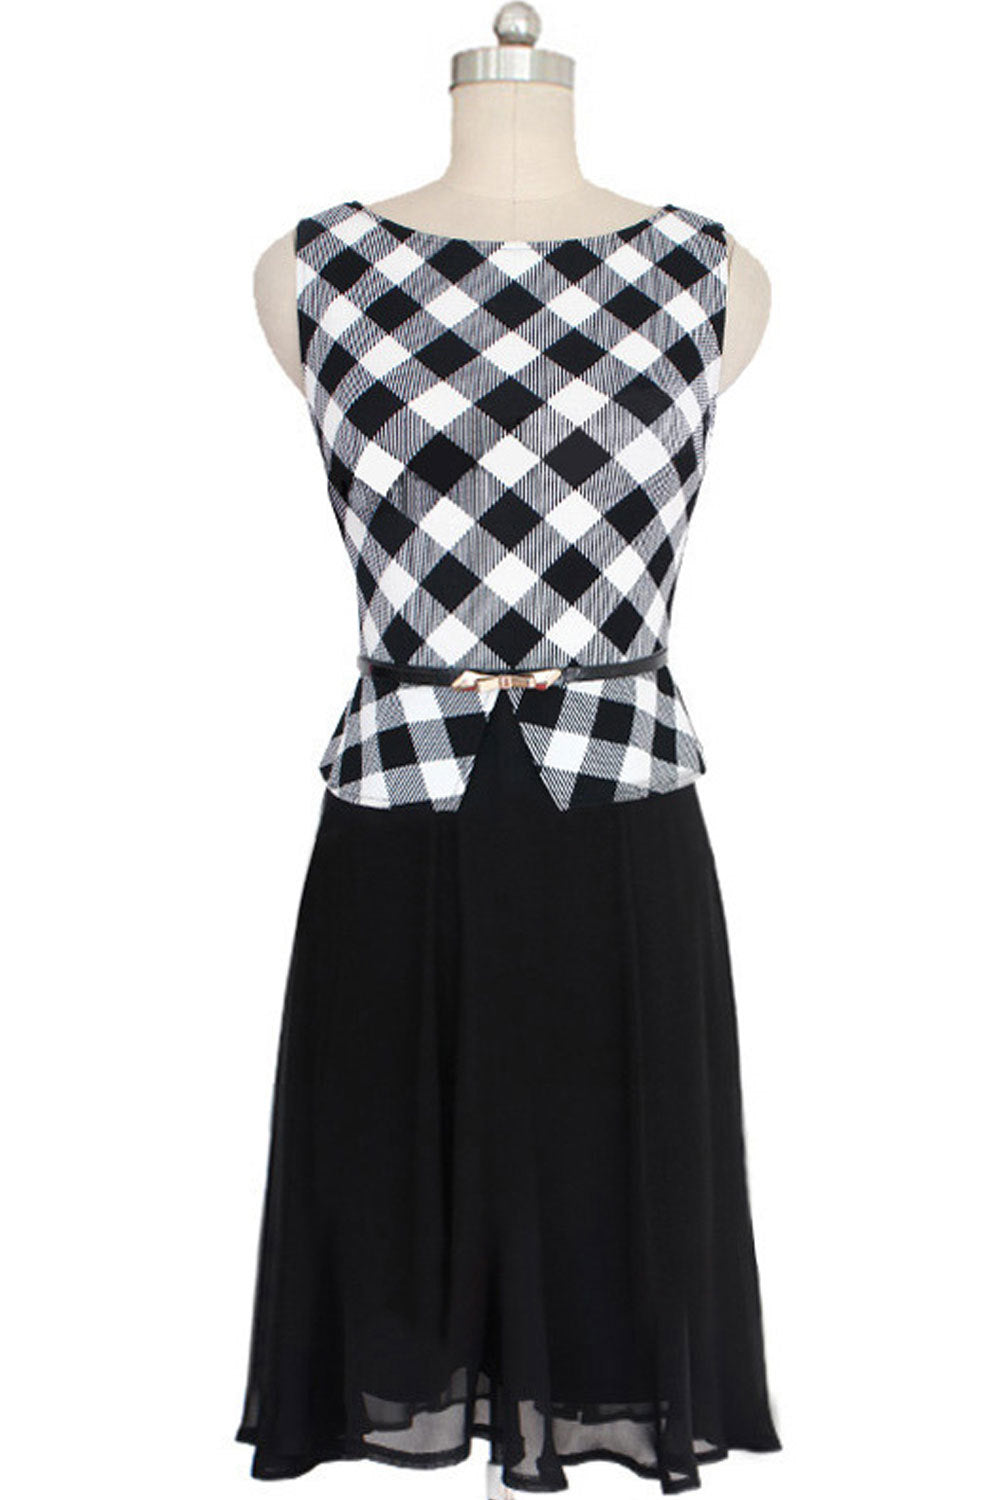 Ketty More Women Sleeveless Plaid Pattern Skirt Halter Chiffon Dress Black White-KMWD294